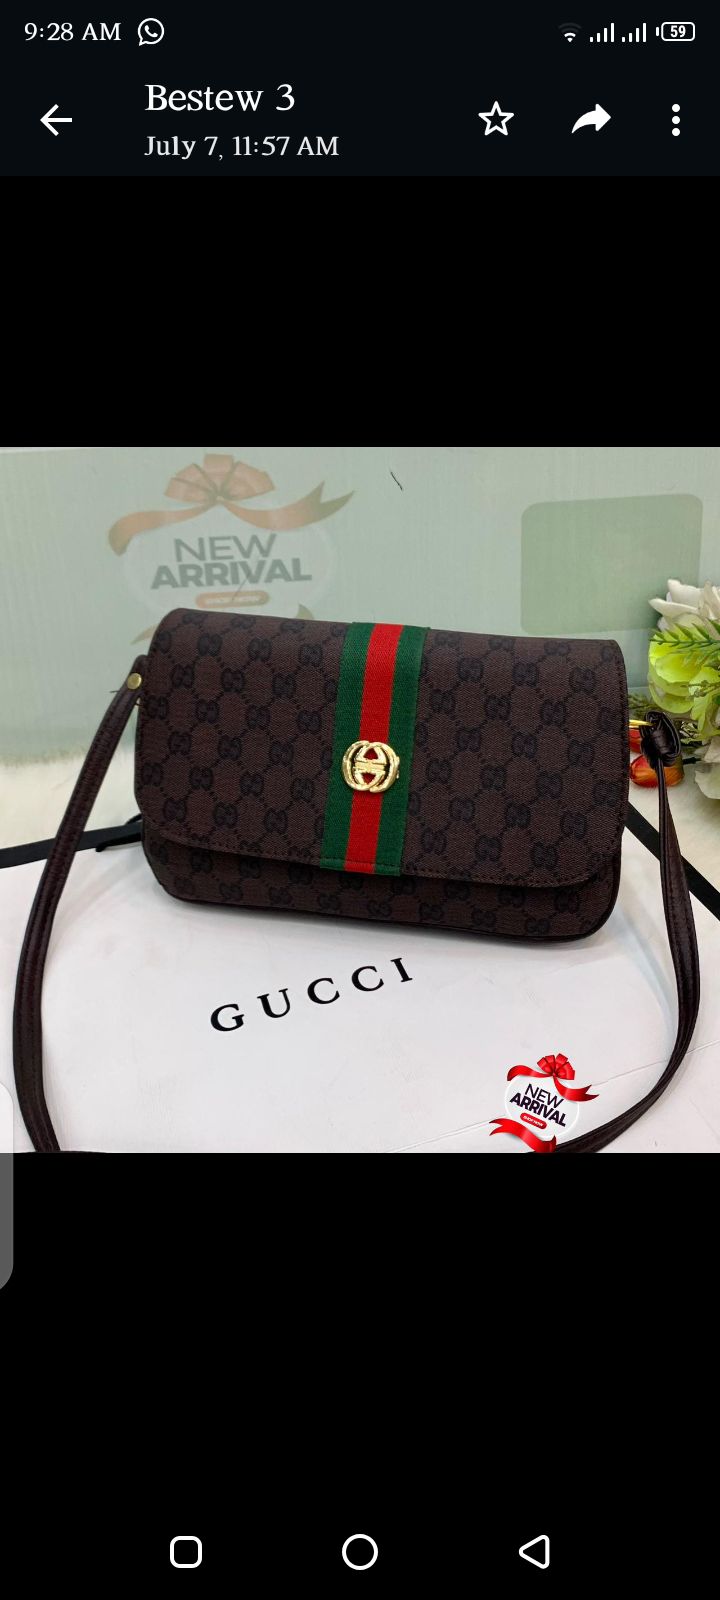 Buy online Gucci Crossbody Bag In Pakistan, Rs 4500, Best Price